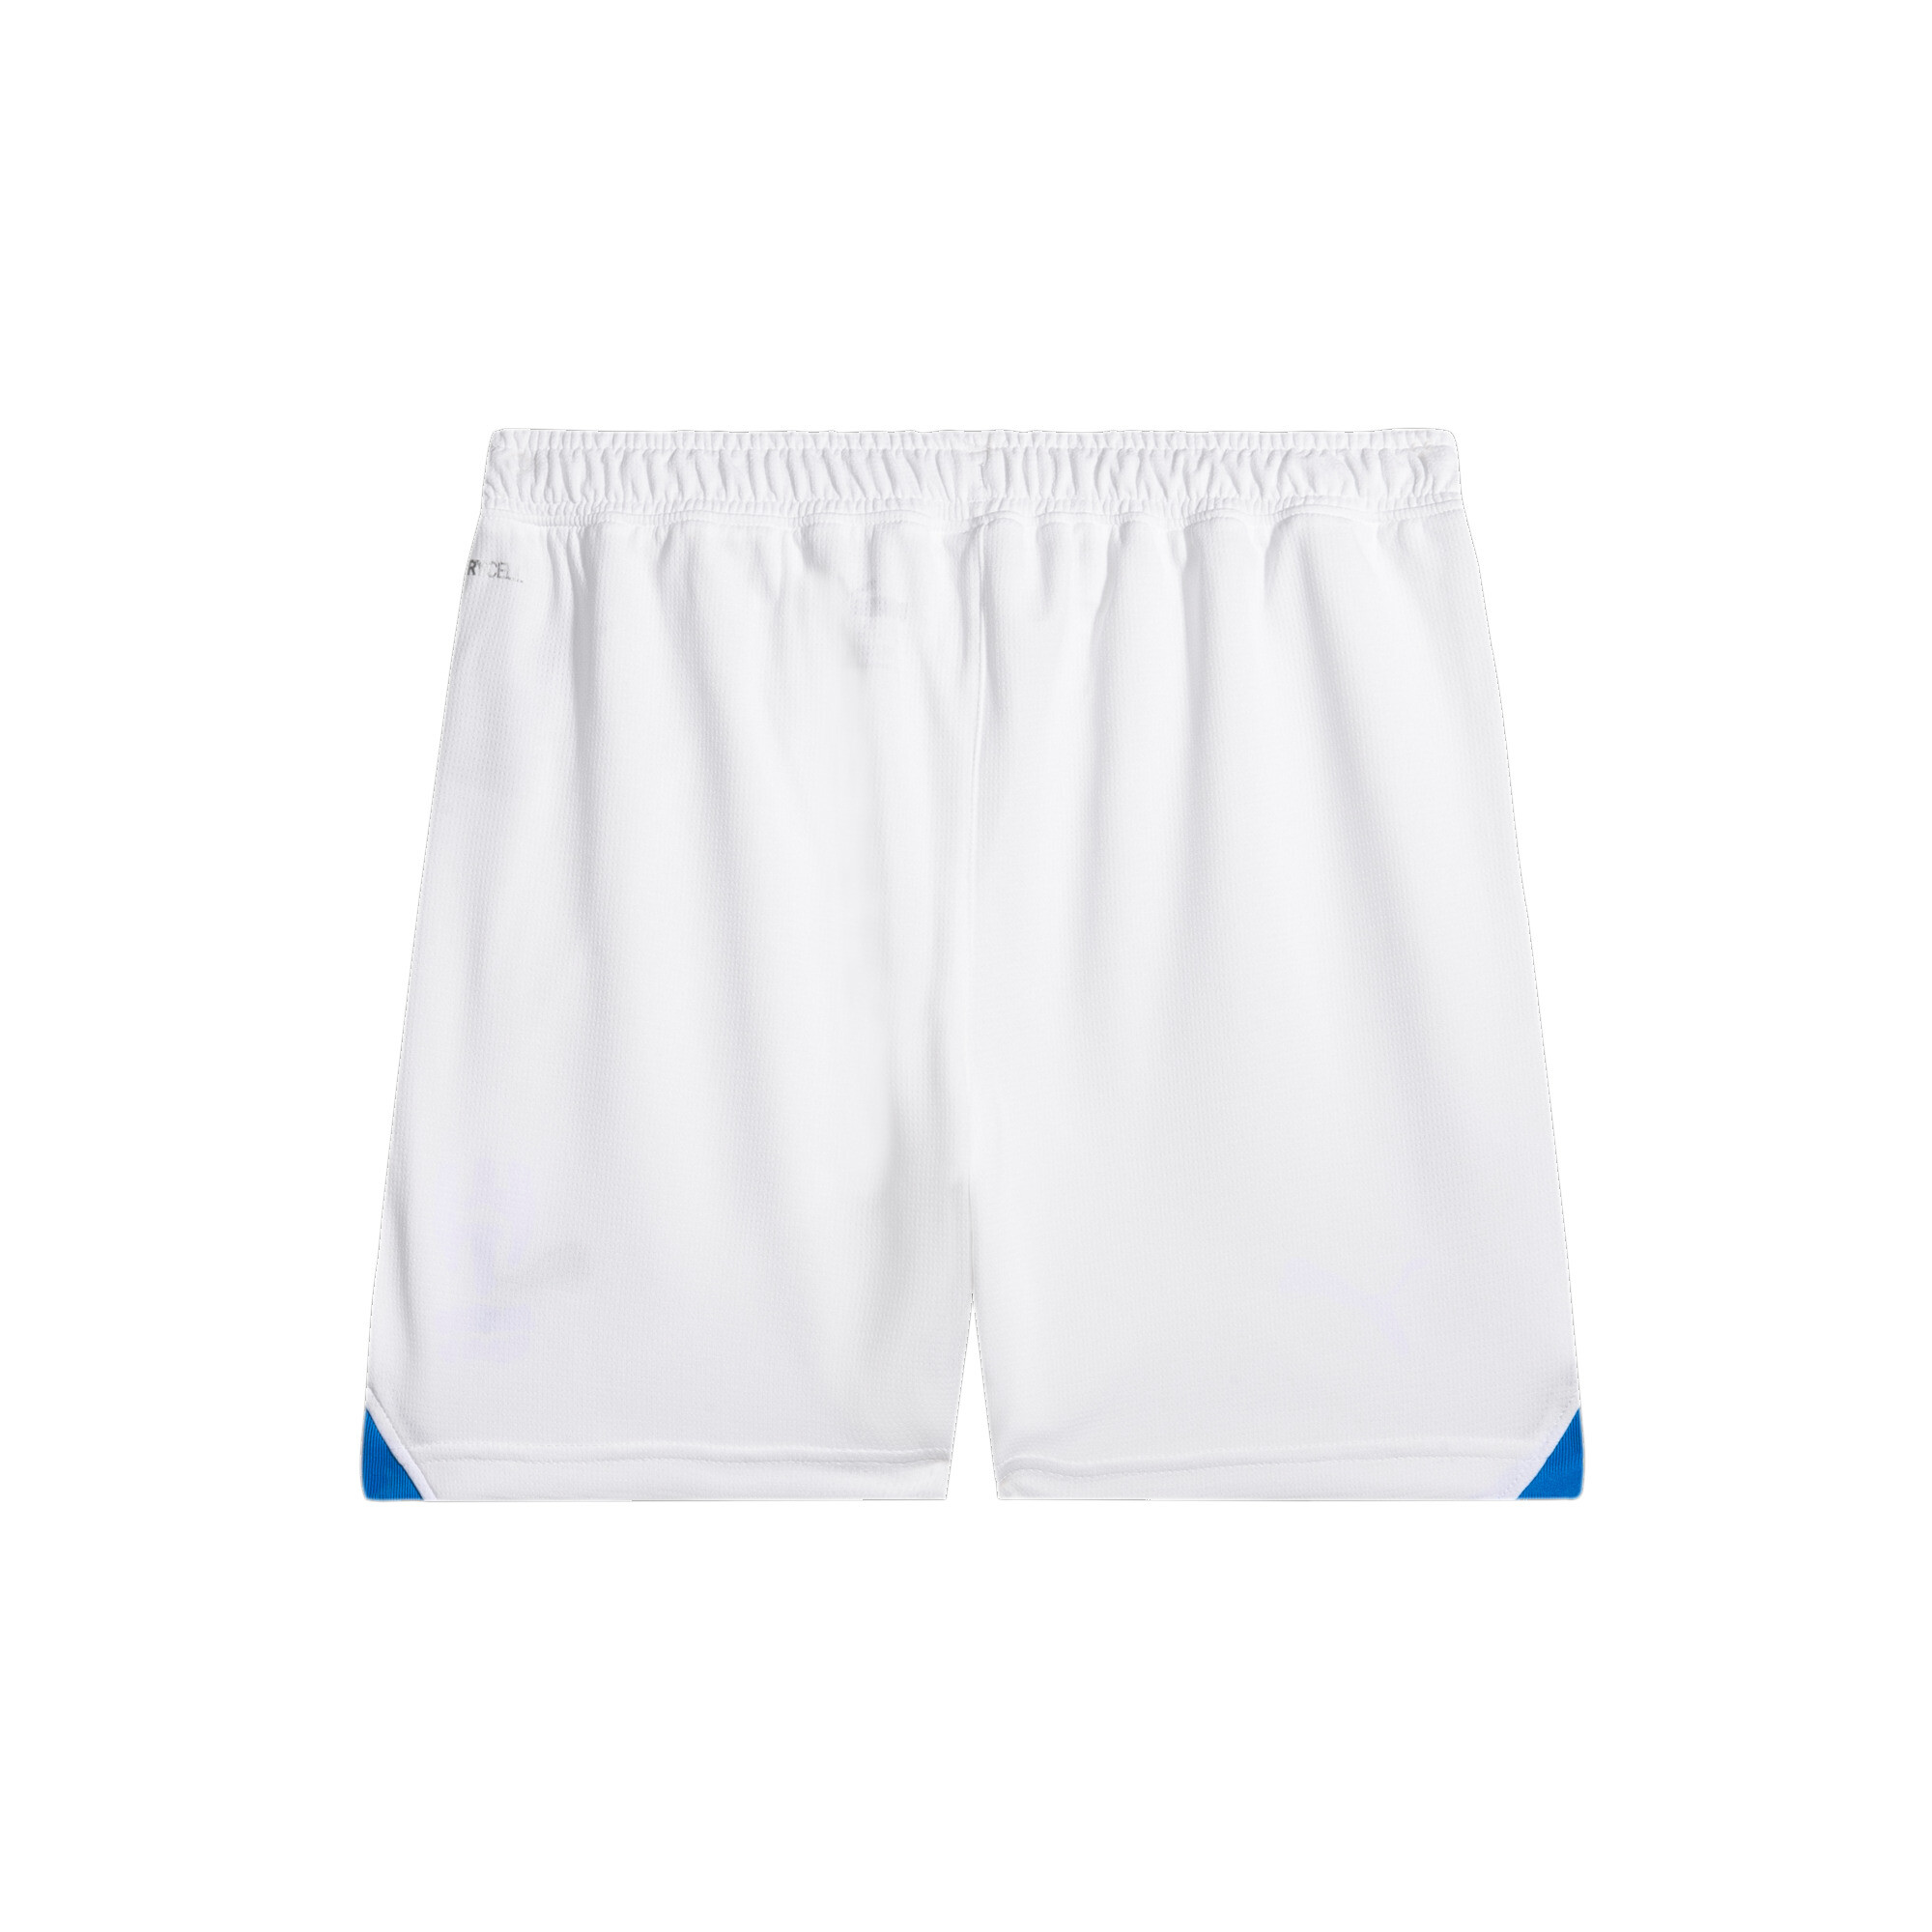 PUMA Al Hilal 23/24 Replica Shorts In White, Size 3-4 Youth